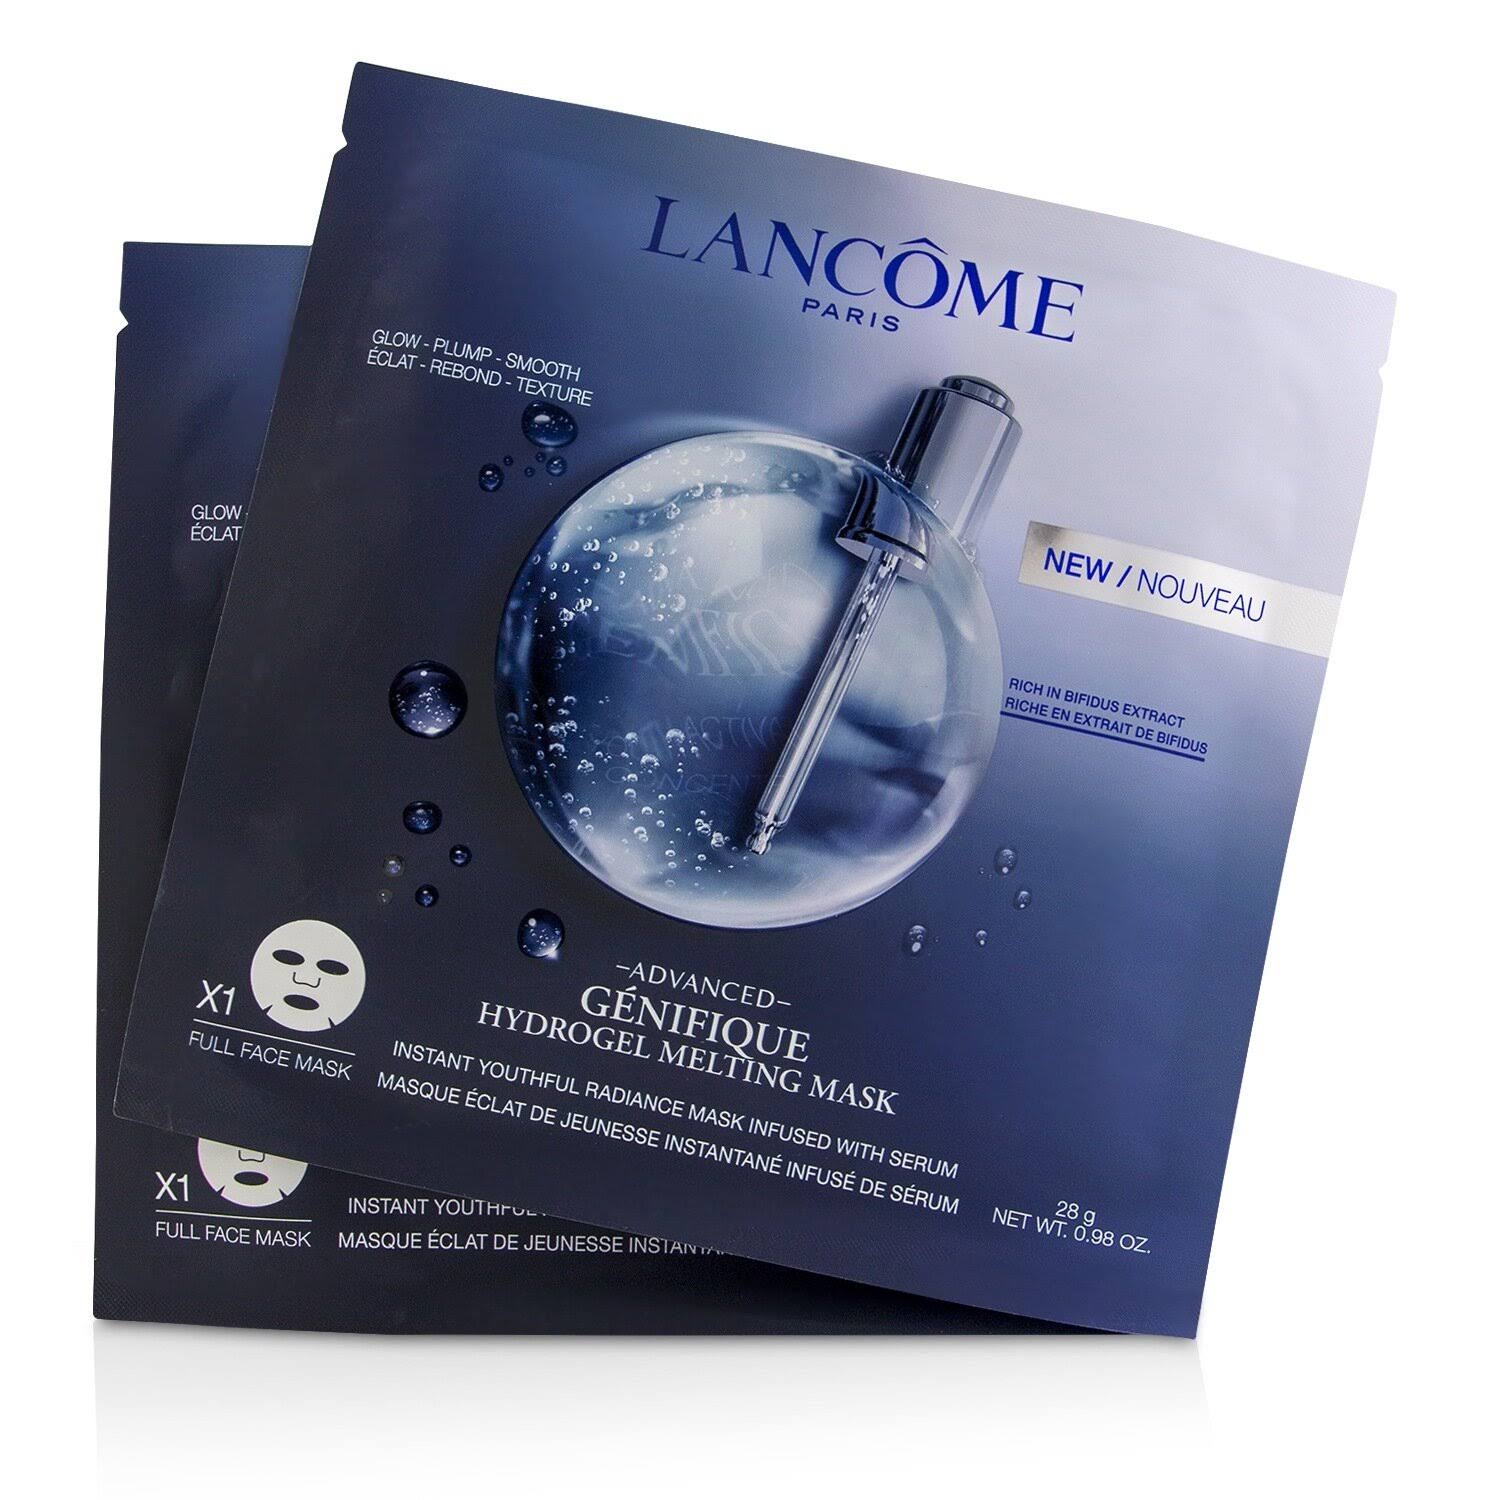 Lancome - Genifique Advanced Hydrogel Melting Mask